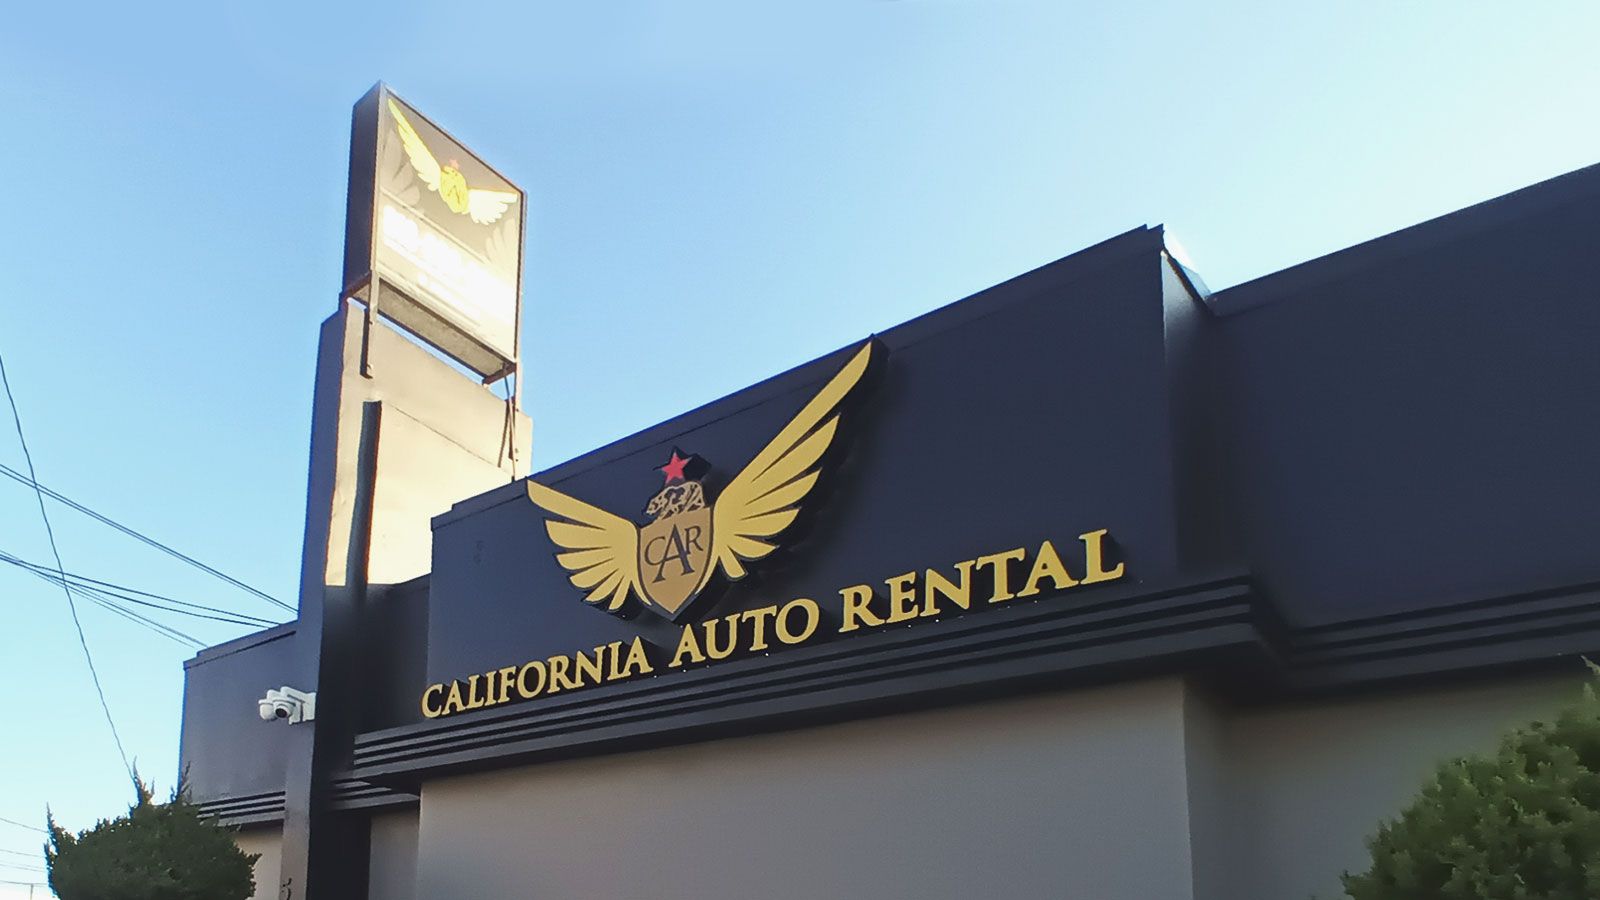 California auto rental building sign